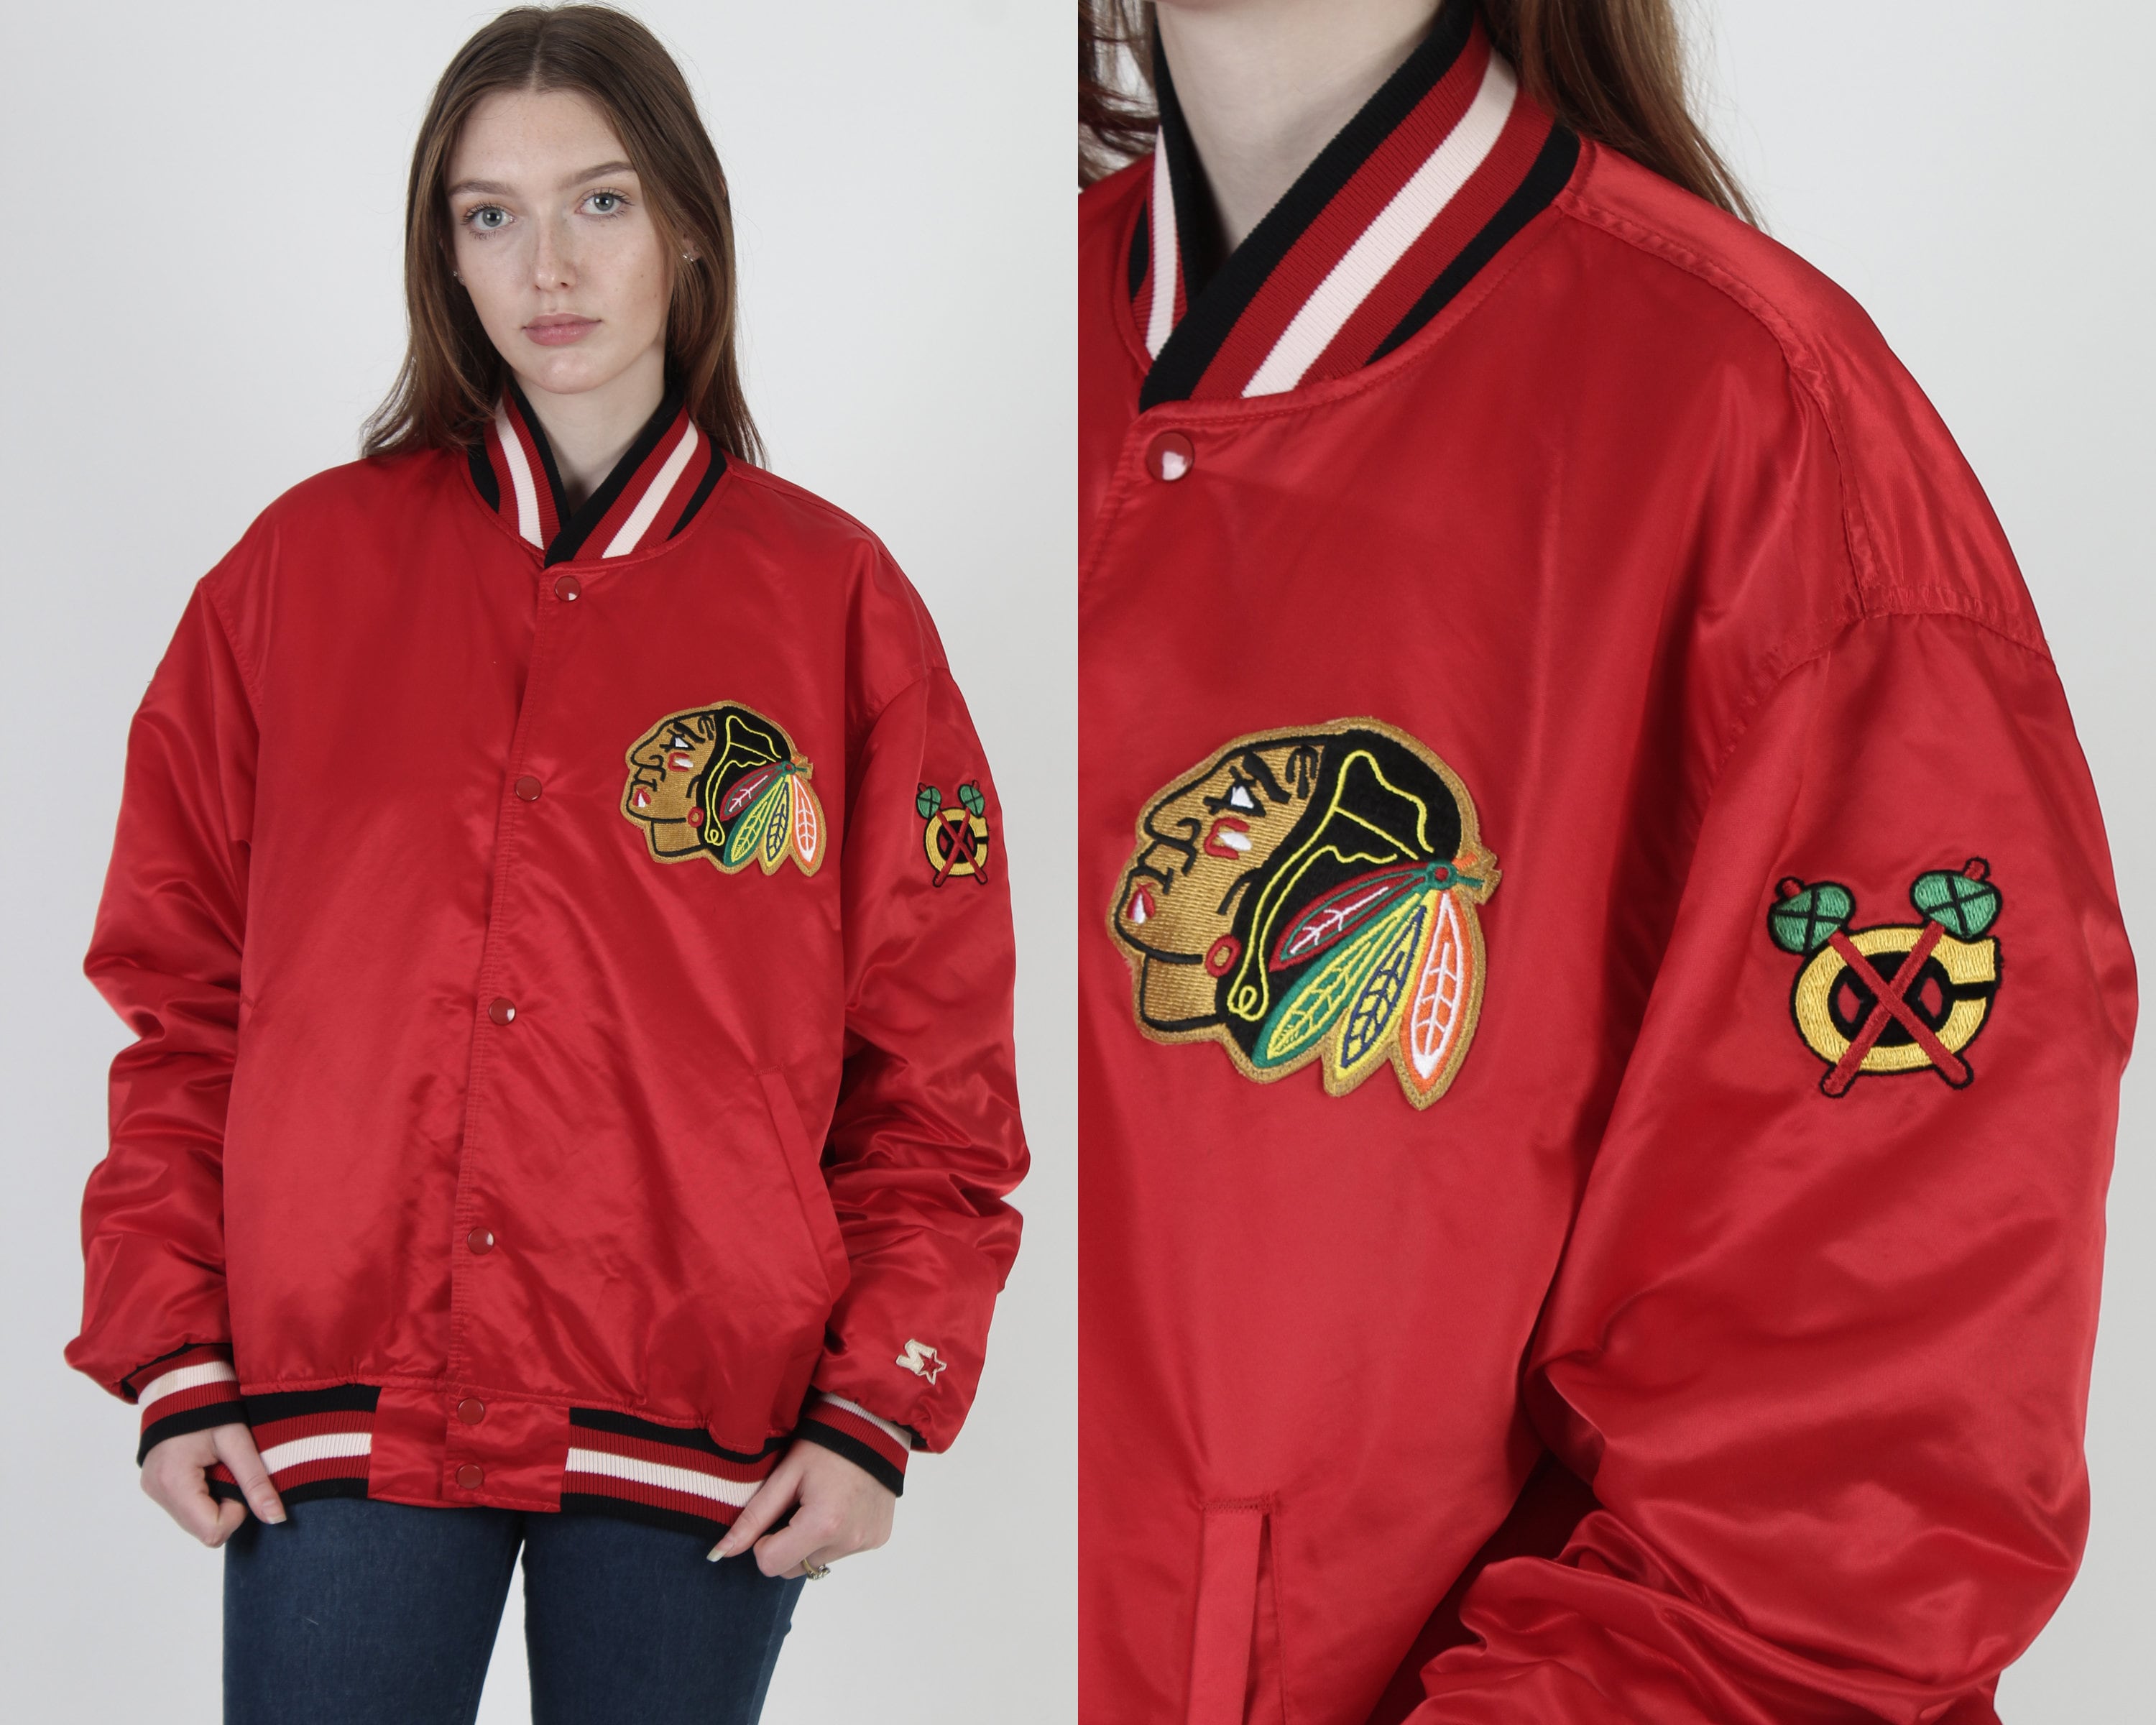 Vintage 80s Blackhawks Chicago Zip Anorak Puffer Jacket